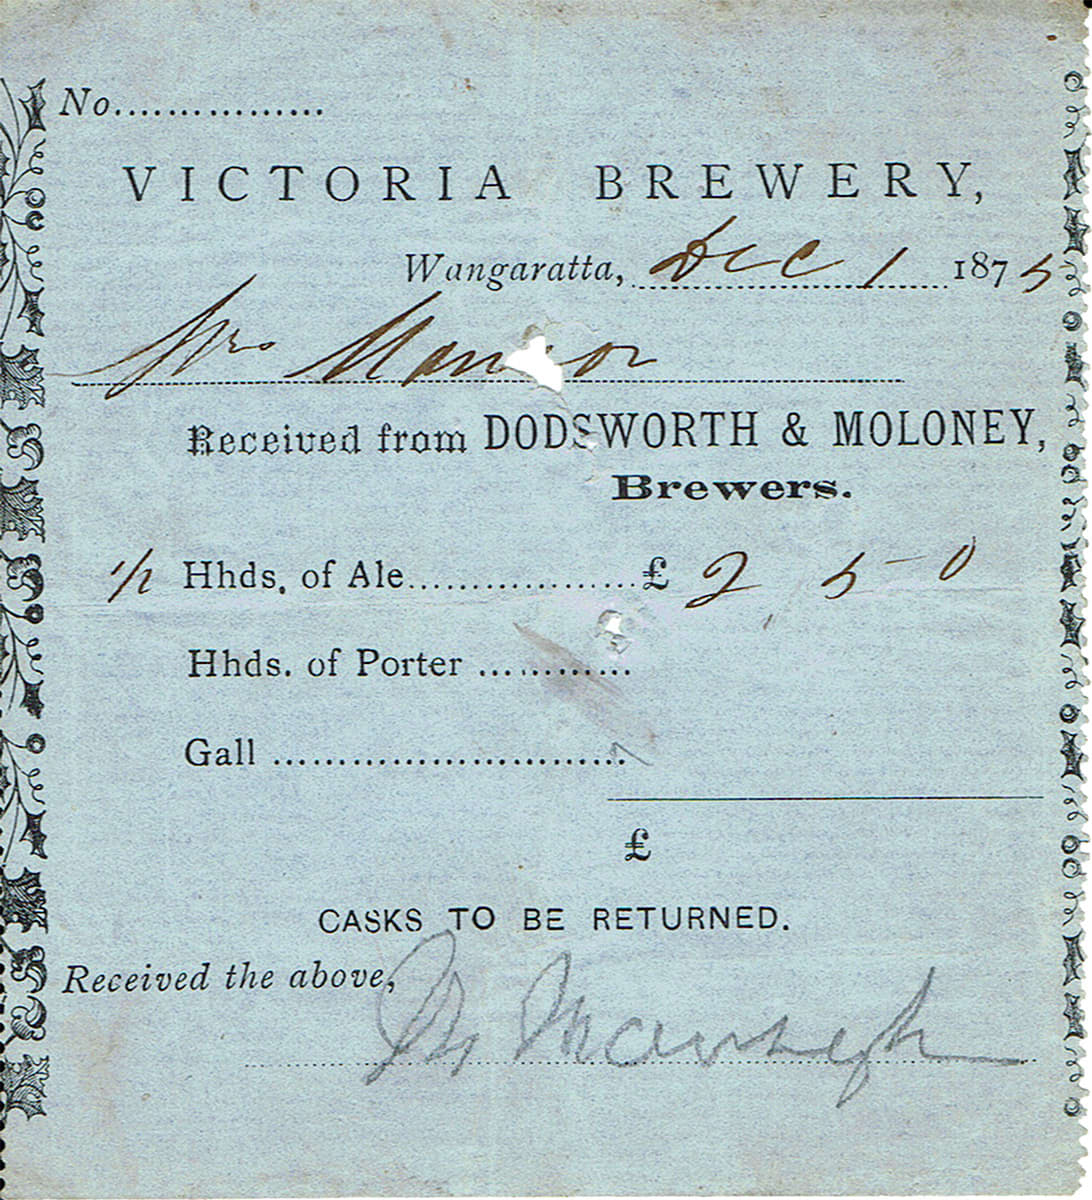 Delivery Receipts Victoria Brewery Wangaratta 1875 Dodsworth Moloney Michell